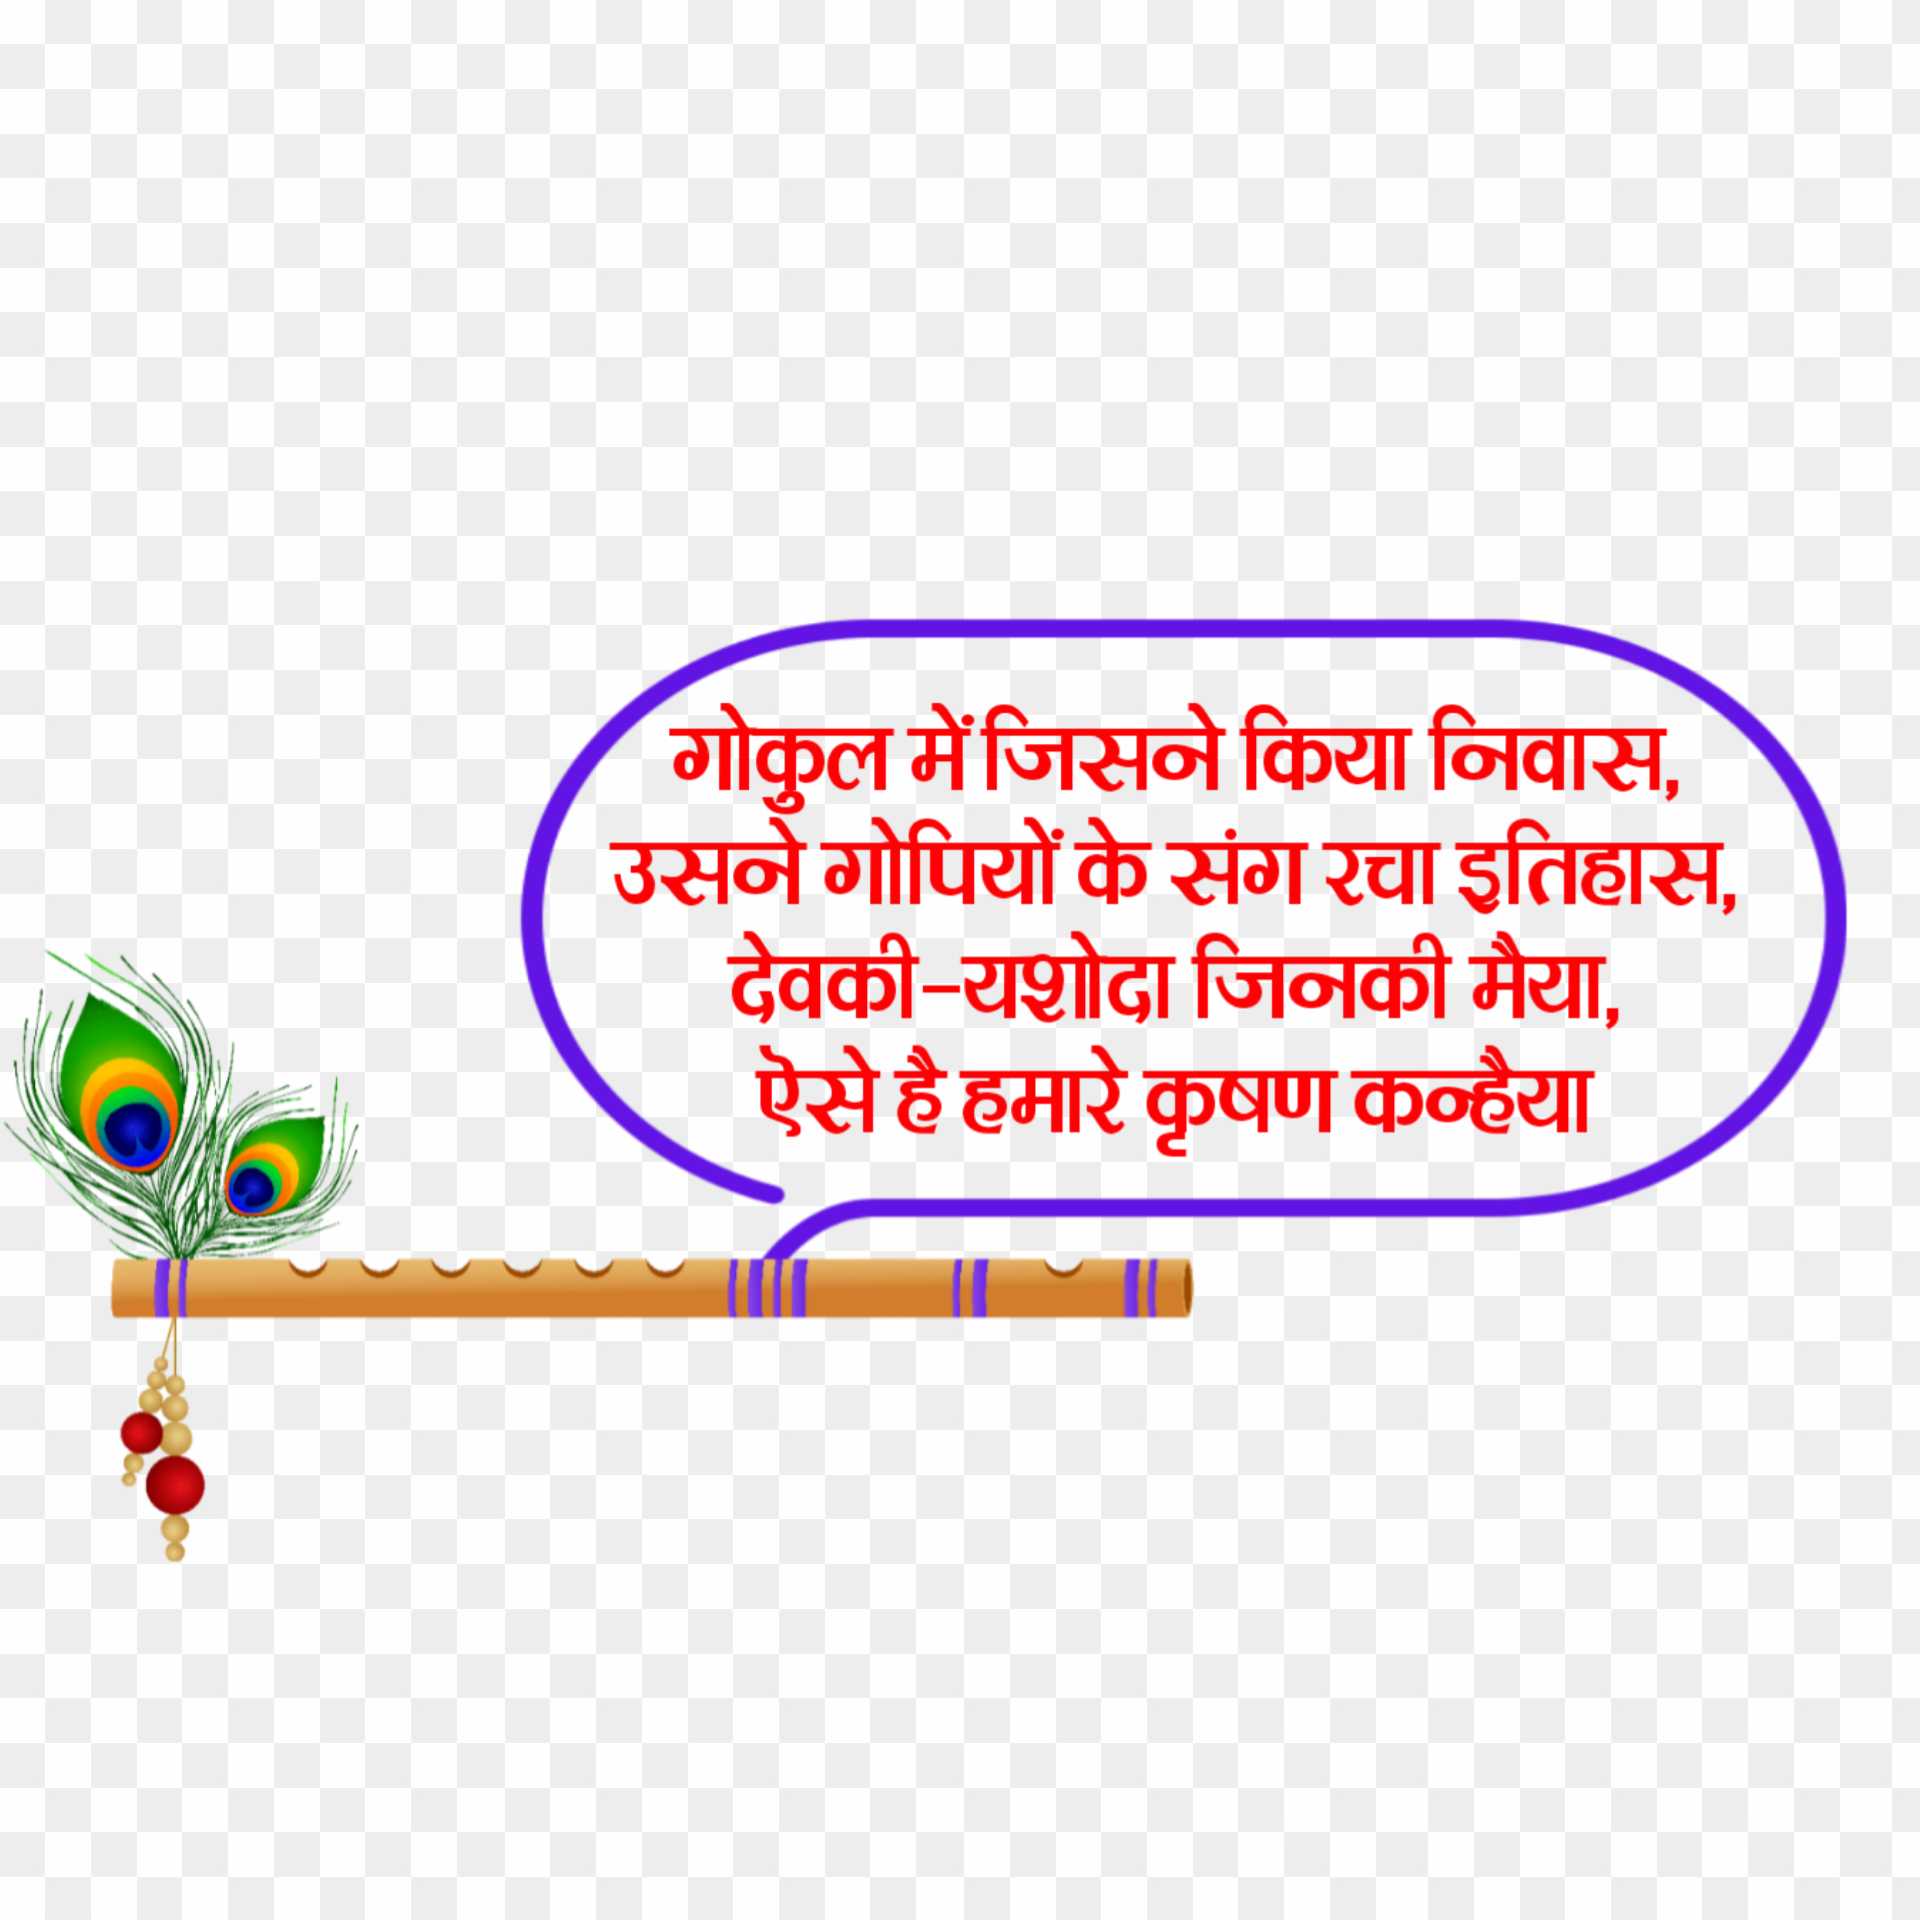 Krishna Janmashtami shayari quoted in Hindi text png images 